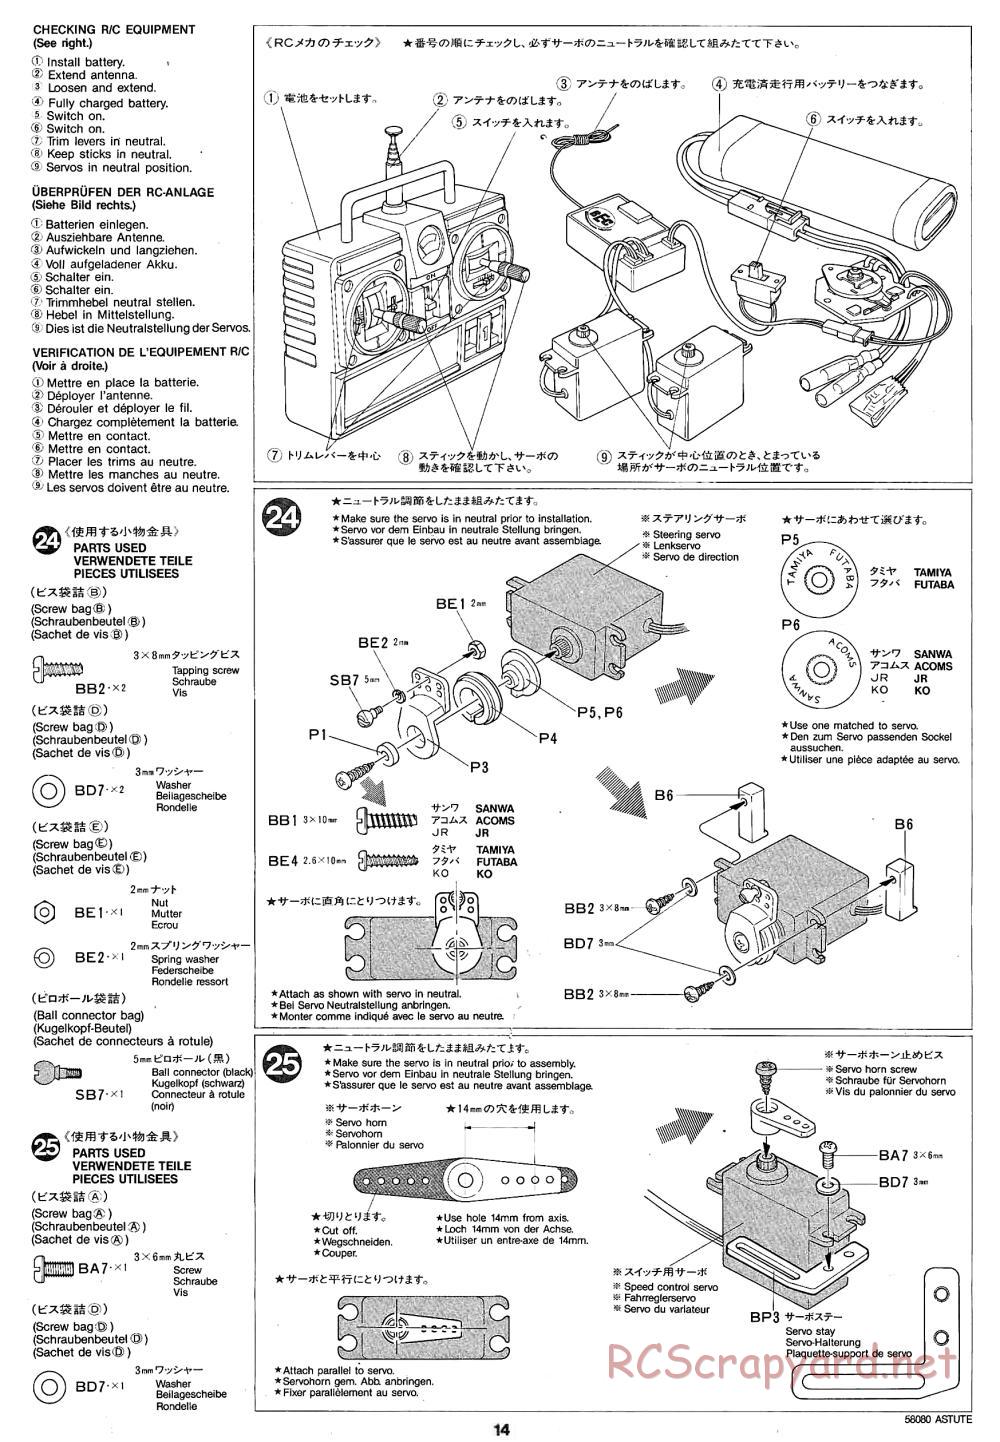 Tamiya - Astute - 58080 - Manual - Page 14